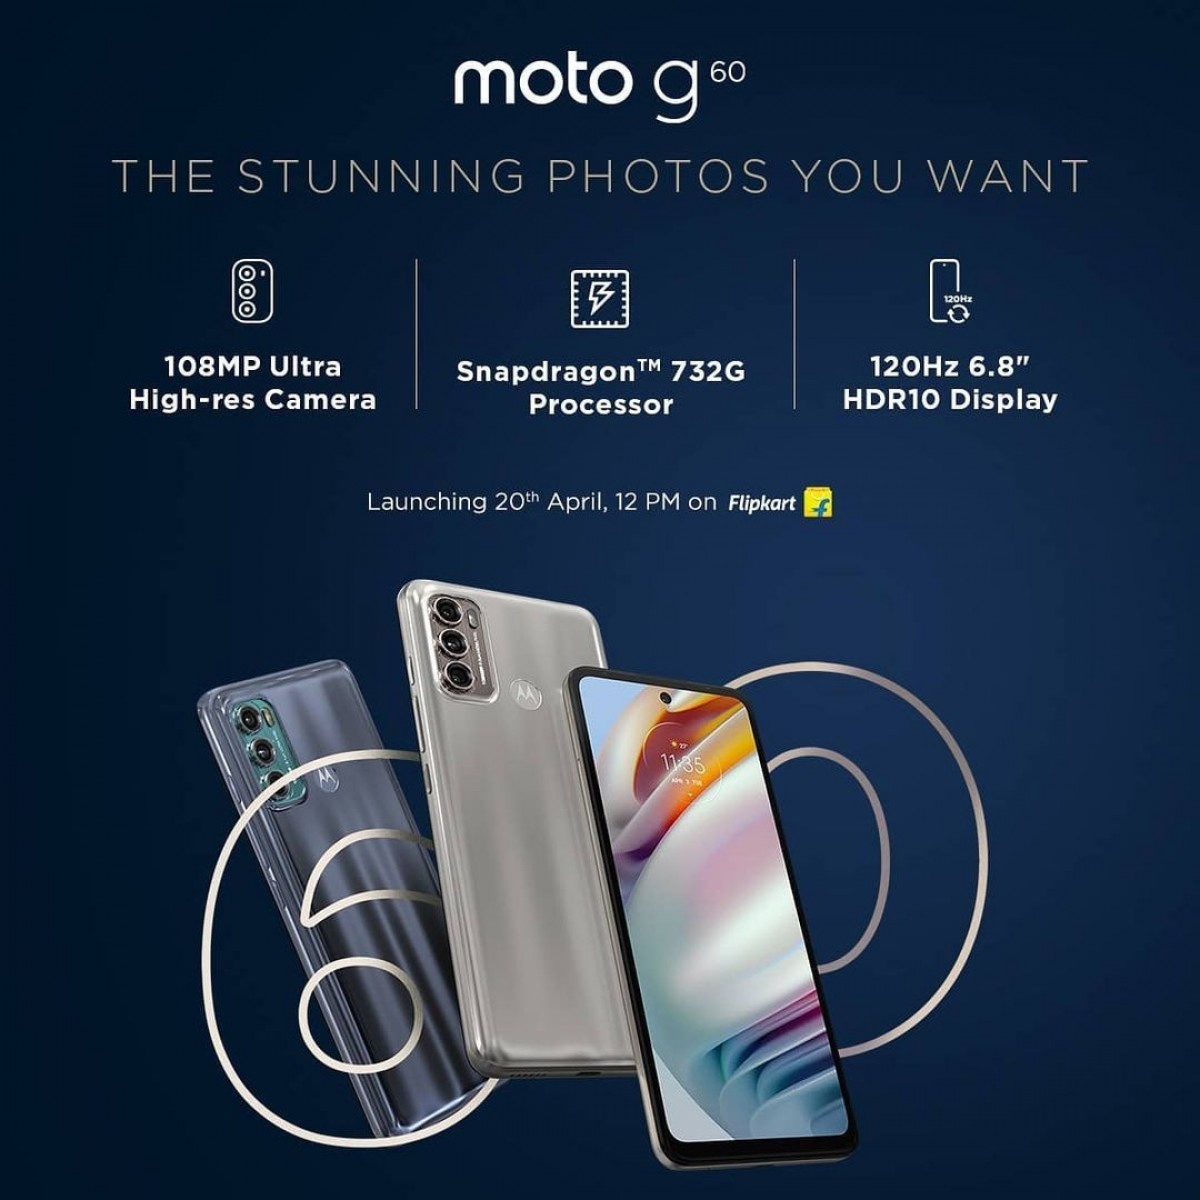 Motorola apresenta os principais recursos do Moto G60 e do Moto G40 Fusion